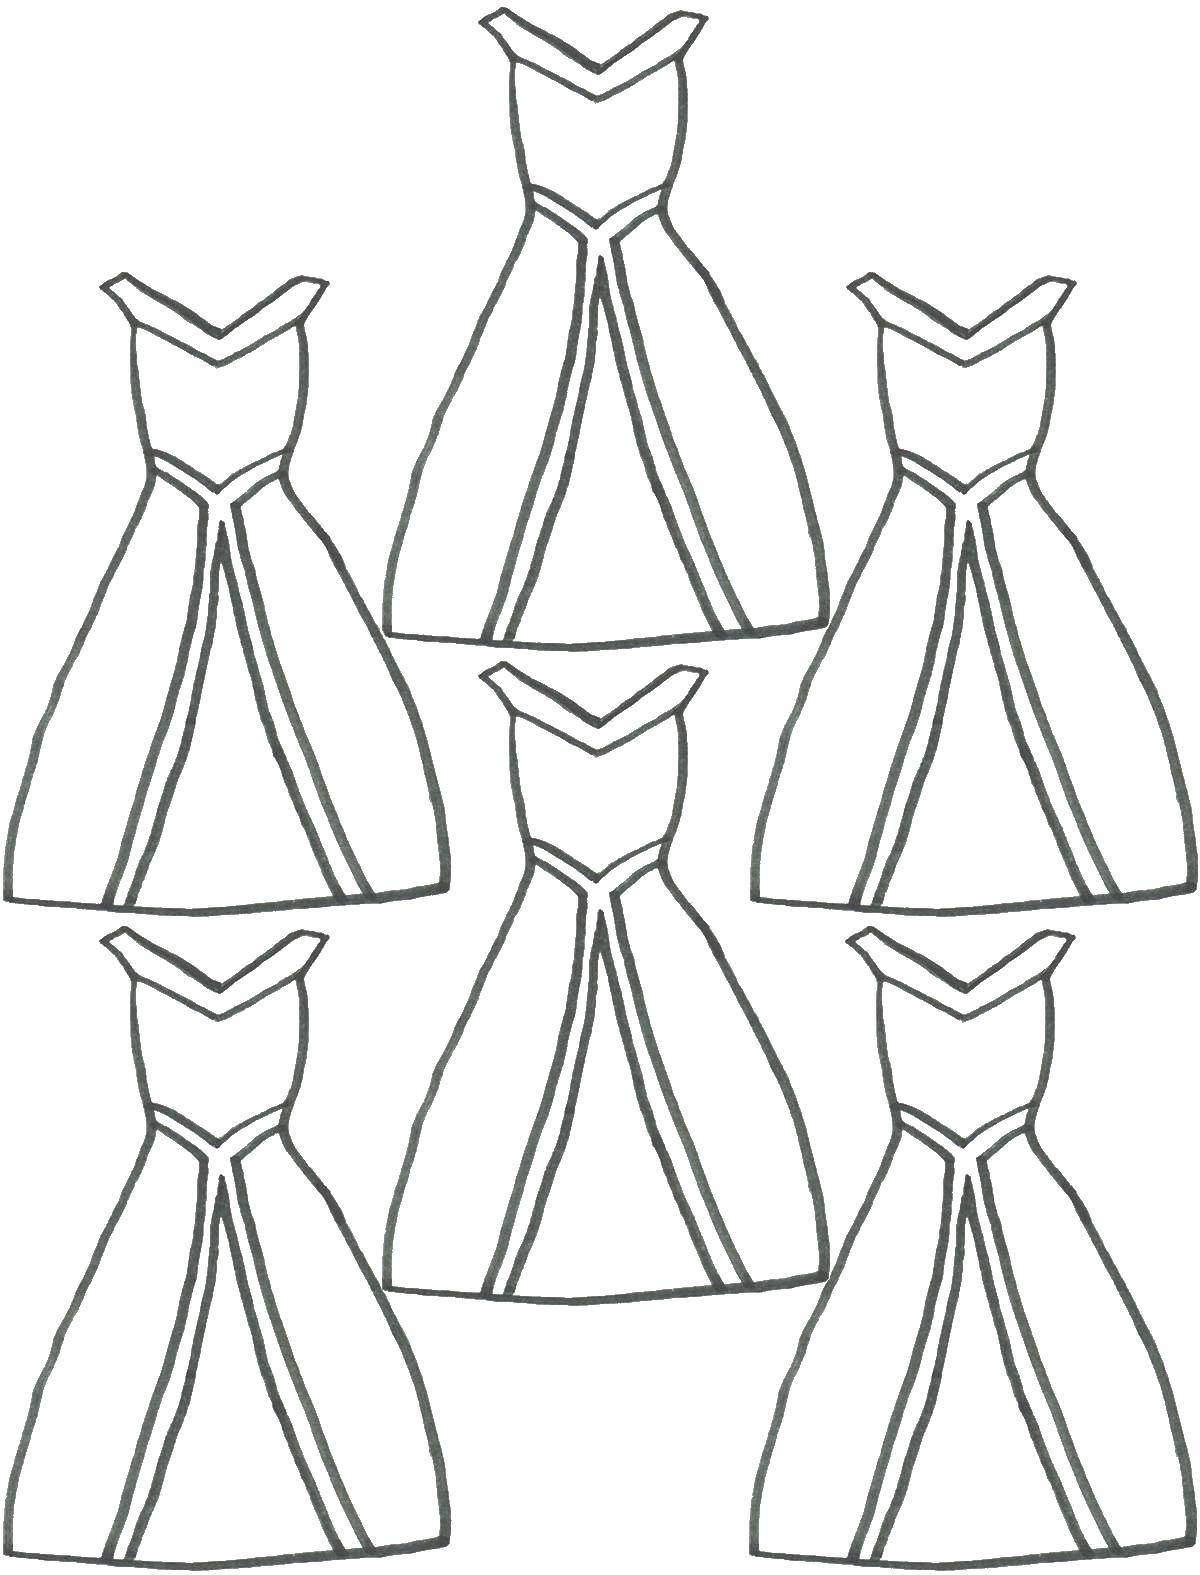 Coloring Six dresses. Category Dress. Tags:  contour, dress.